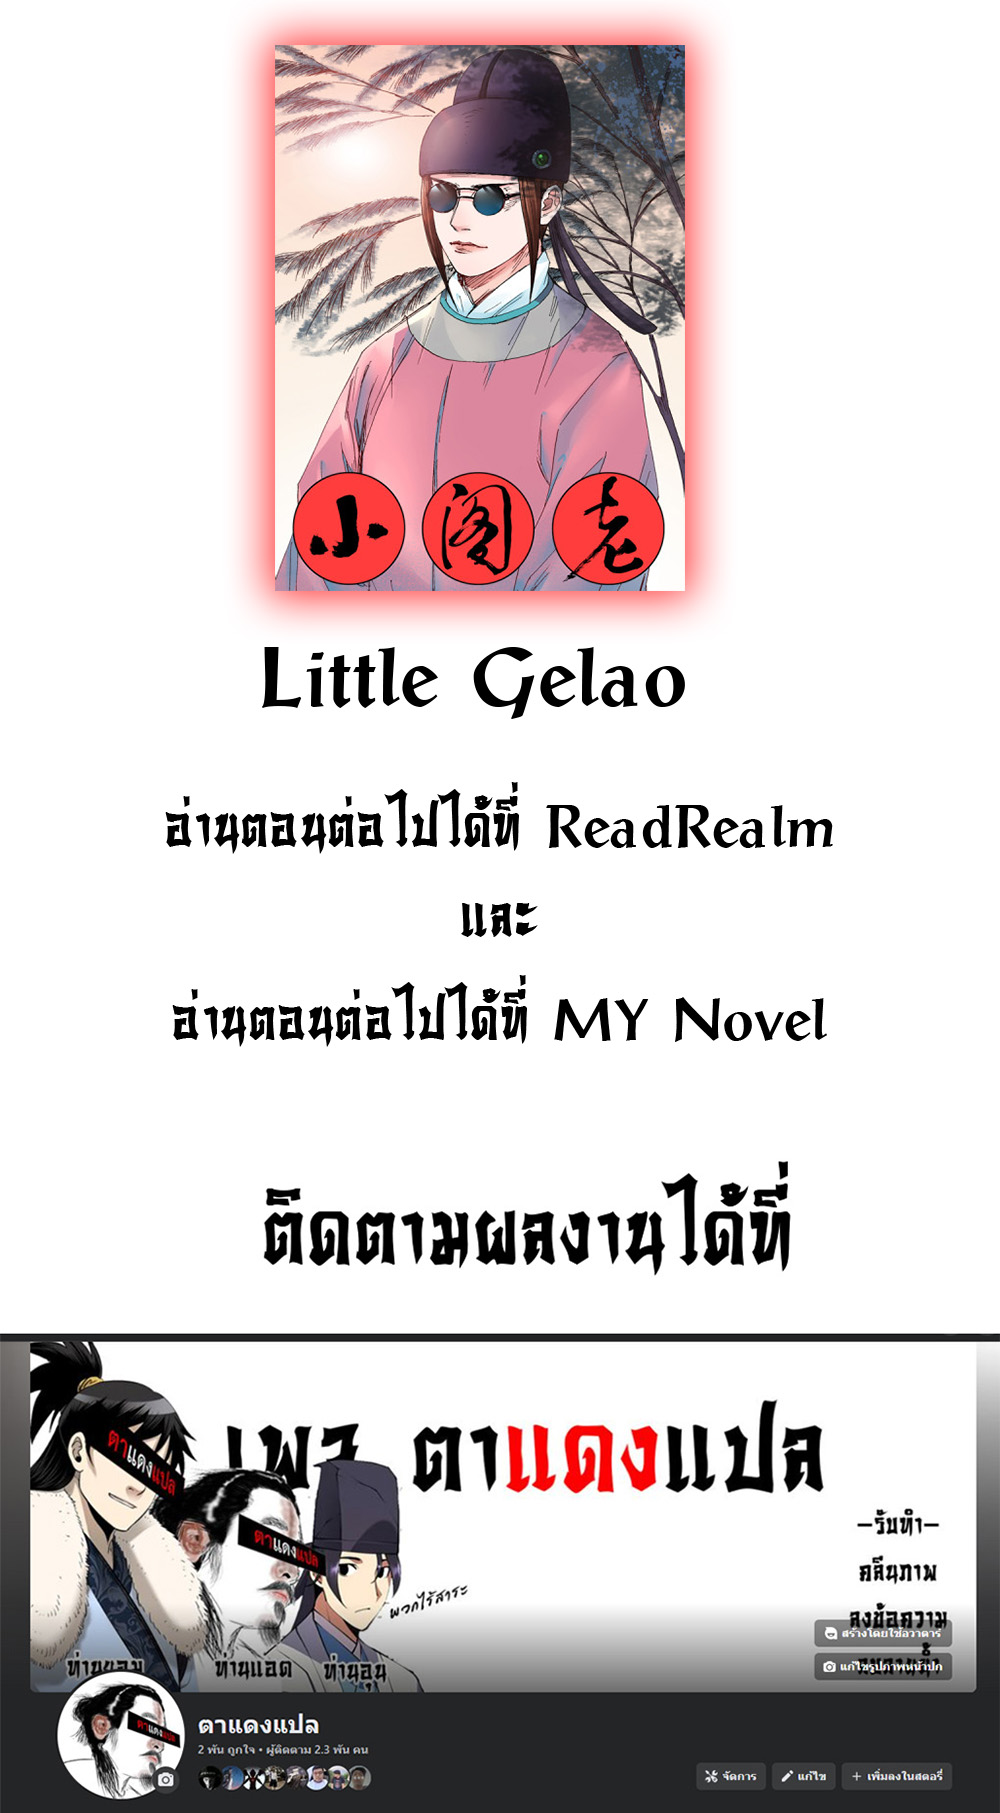 Little Gelao 12 (6)